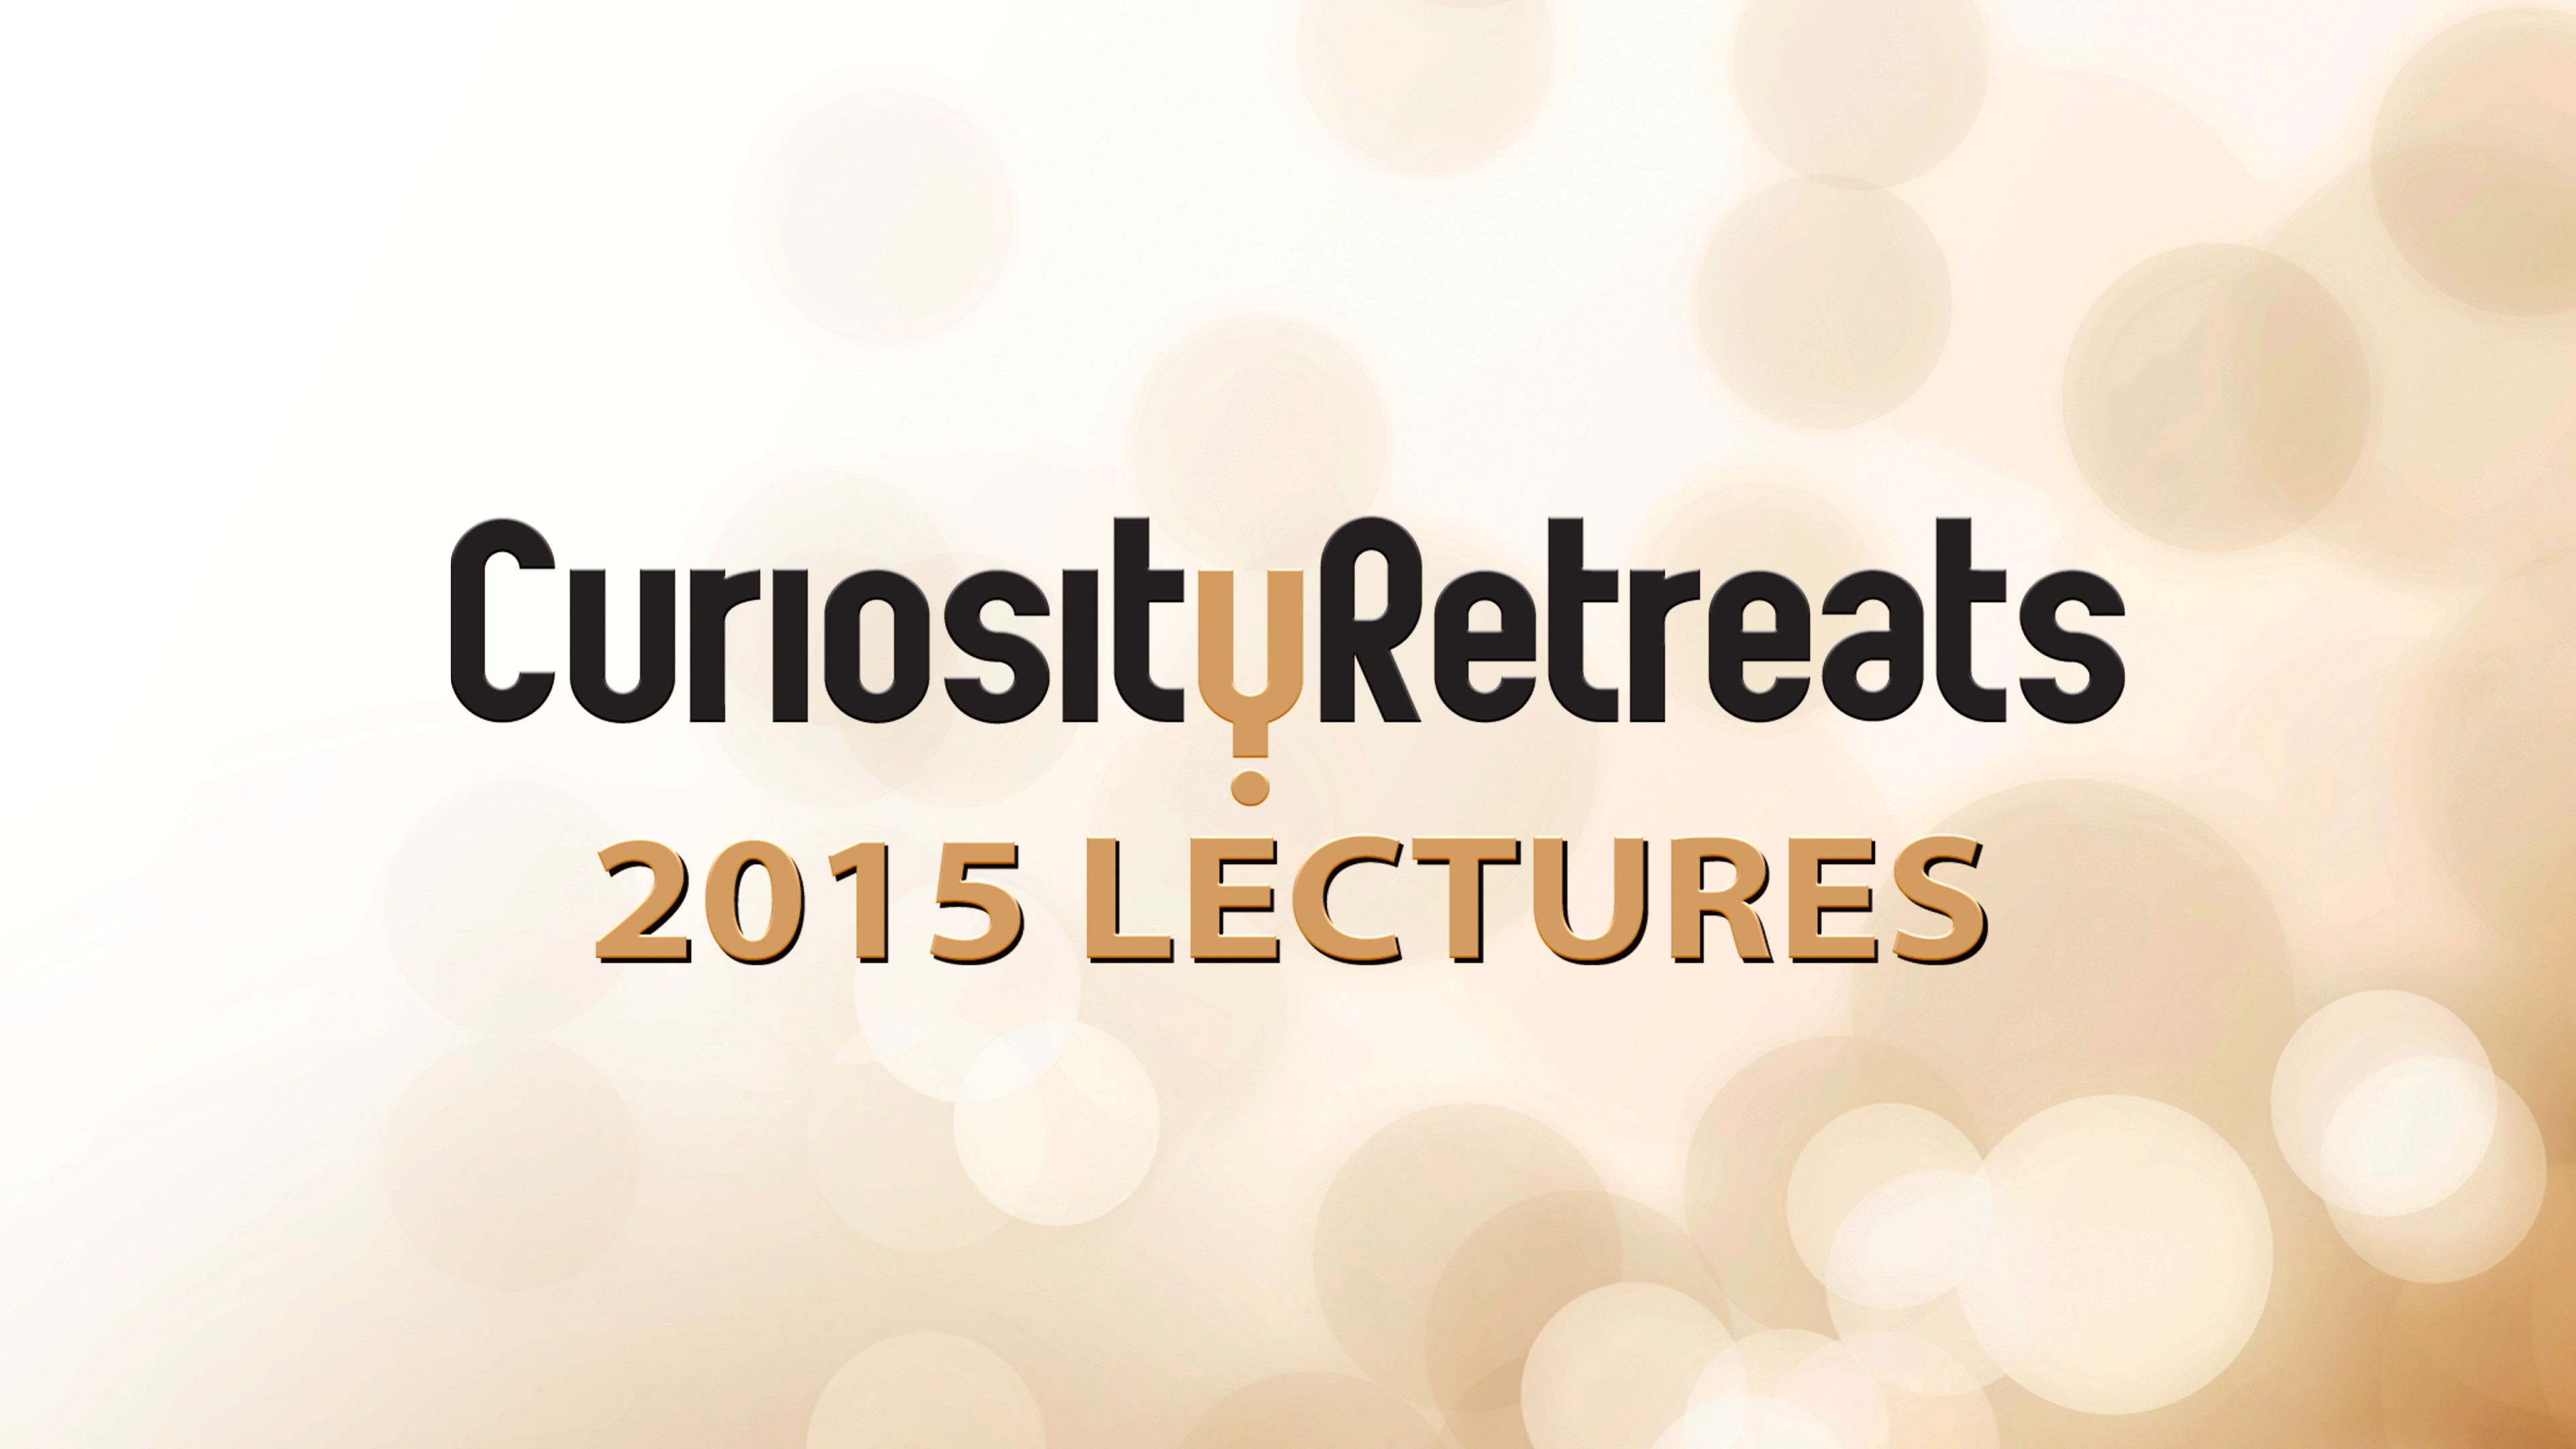 Curiosity Retreats 2015 Lectures